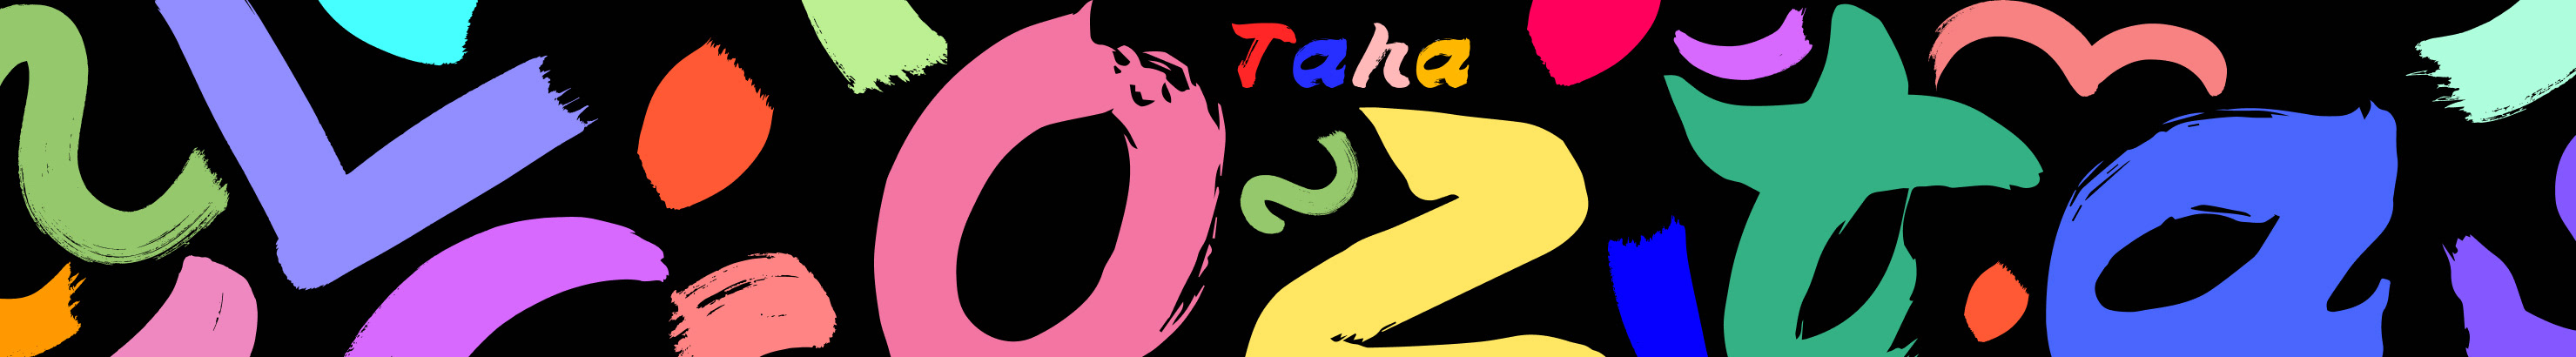 Taha ÖZTAŞ's profile banner